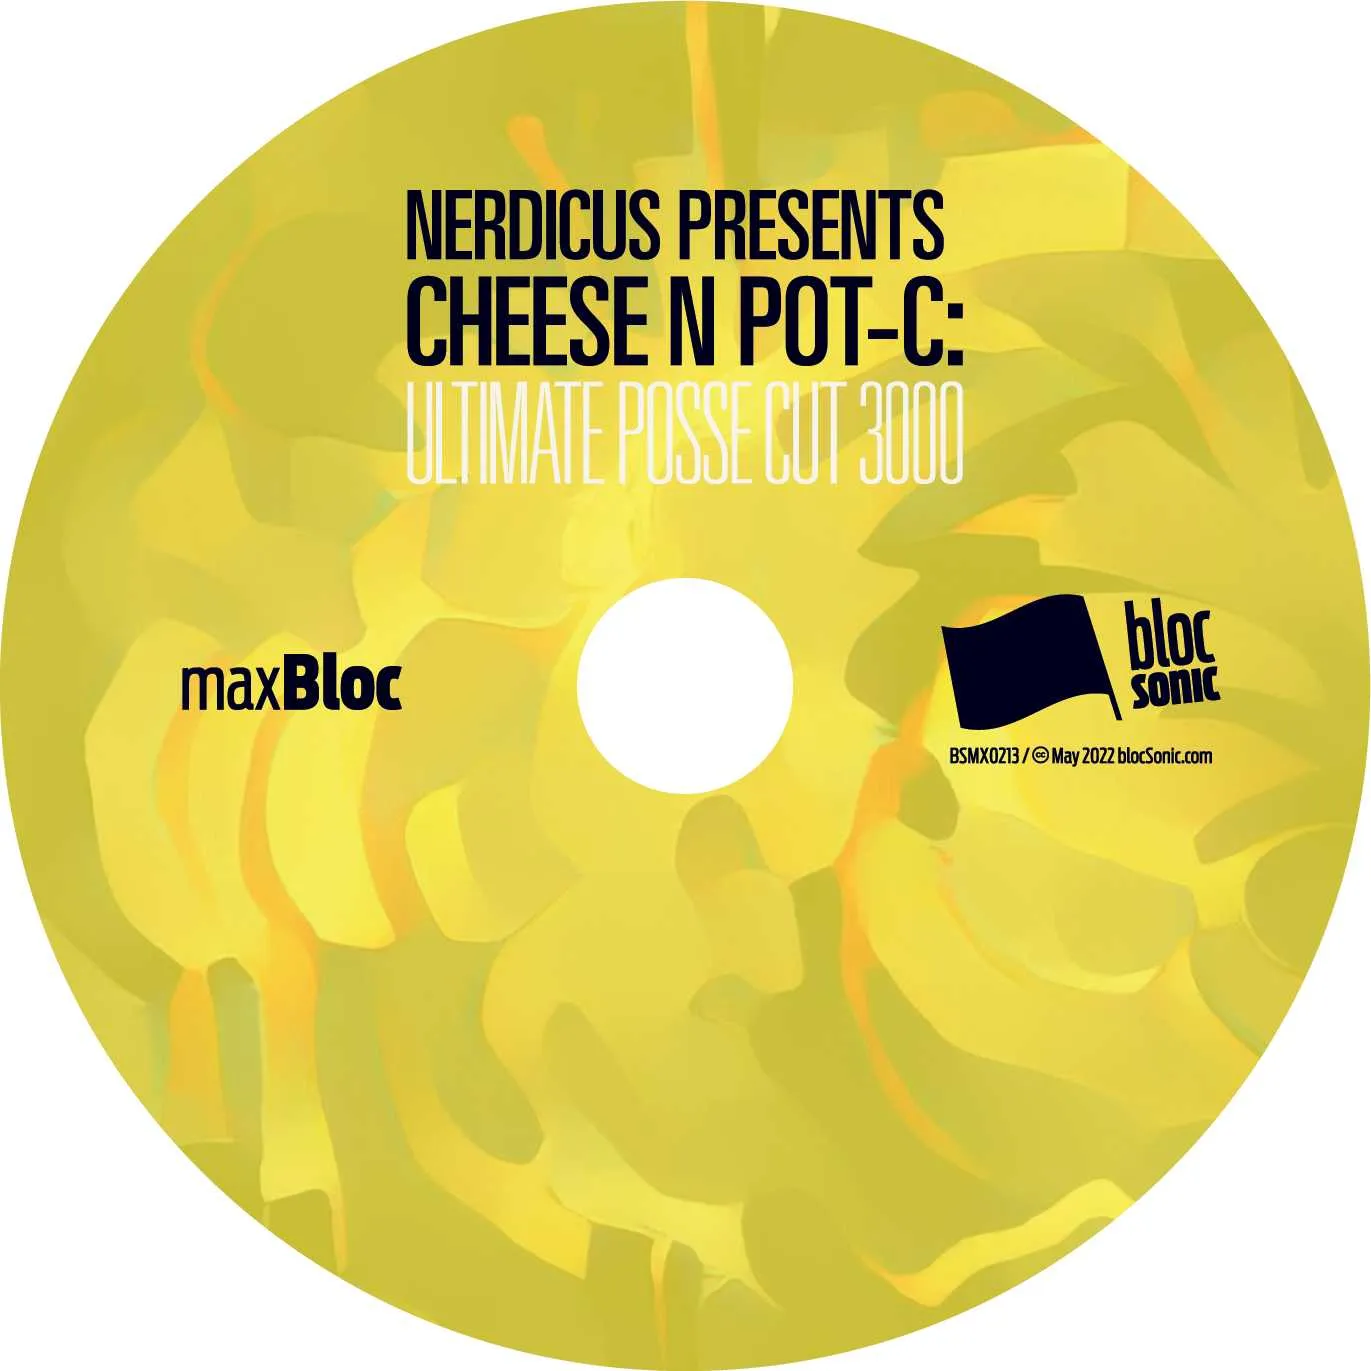 Album disc for “Nerdicus Presents Cheese N Pot-C: Ultimate Posse Cut 3000” by Cheese N Pot-C